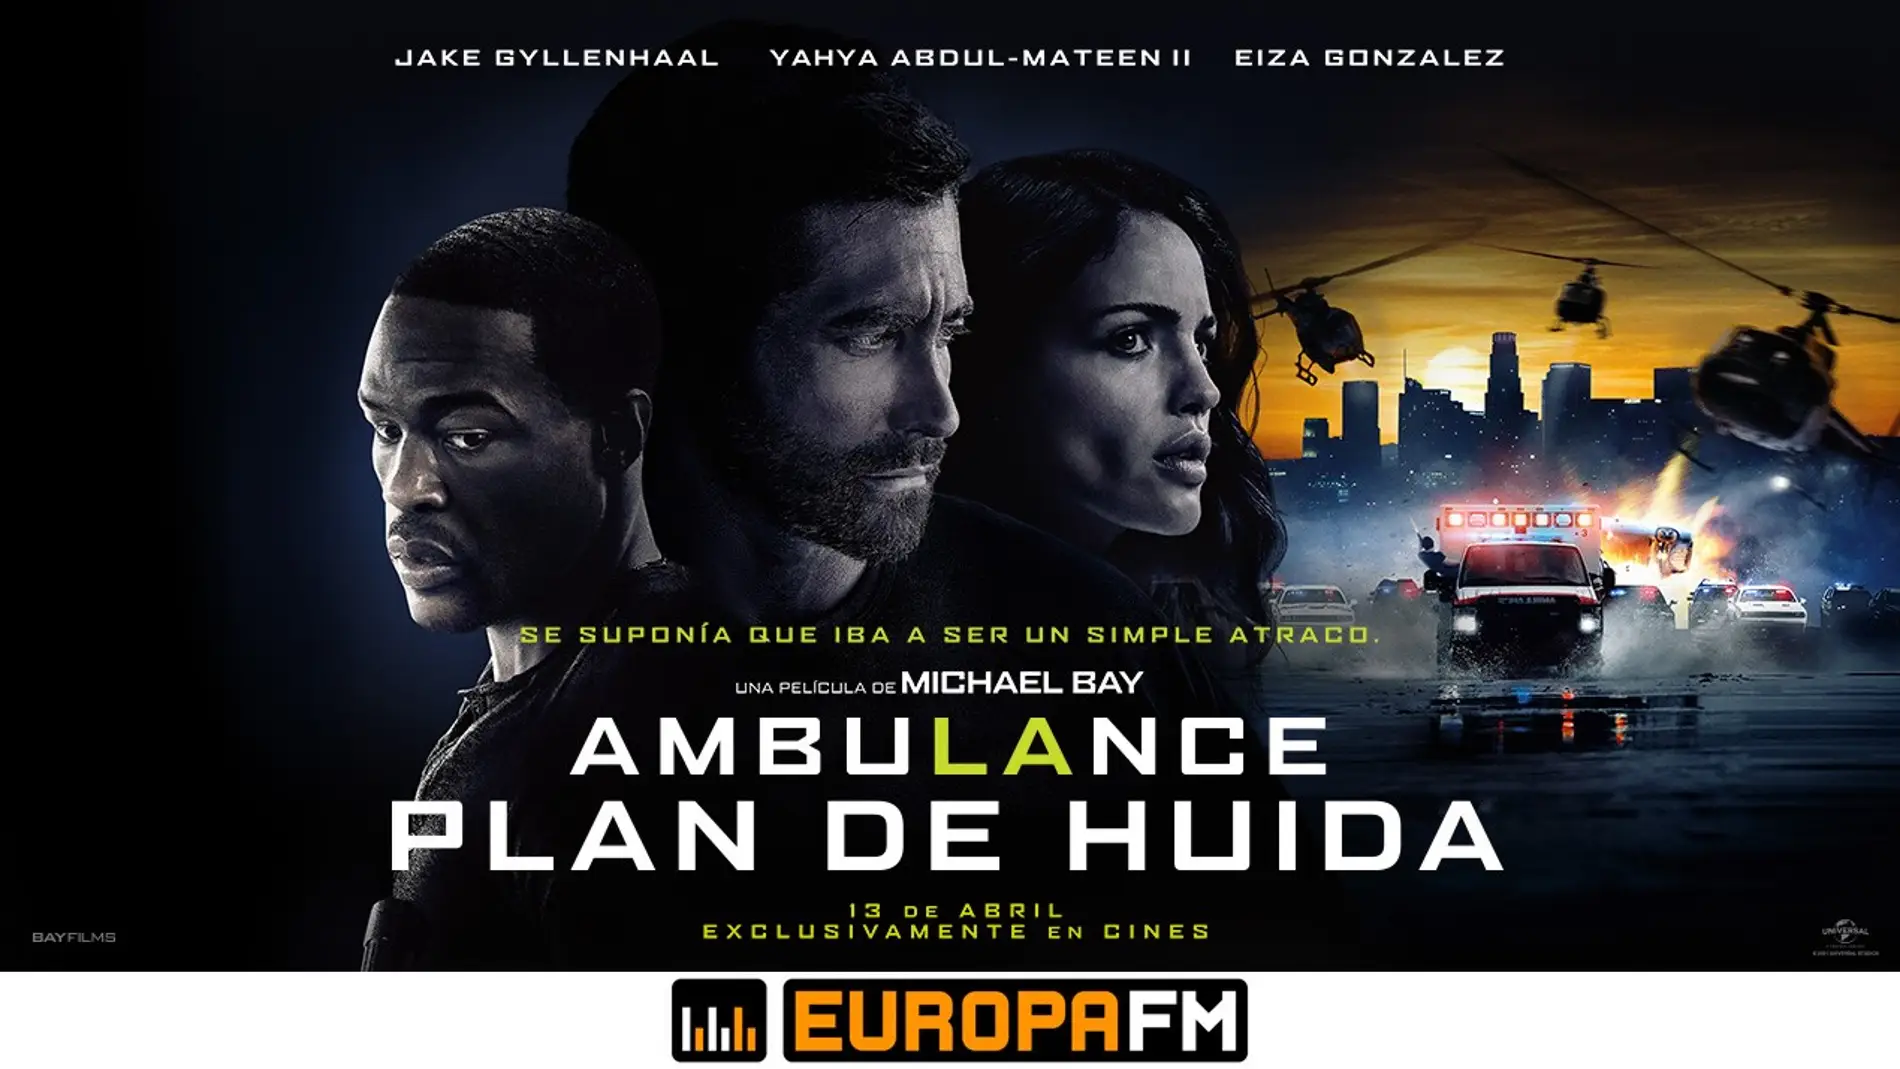 Cartel de la película 'Ambulancia: plan de huida'